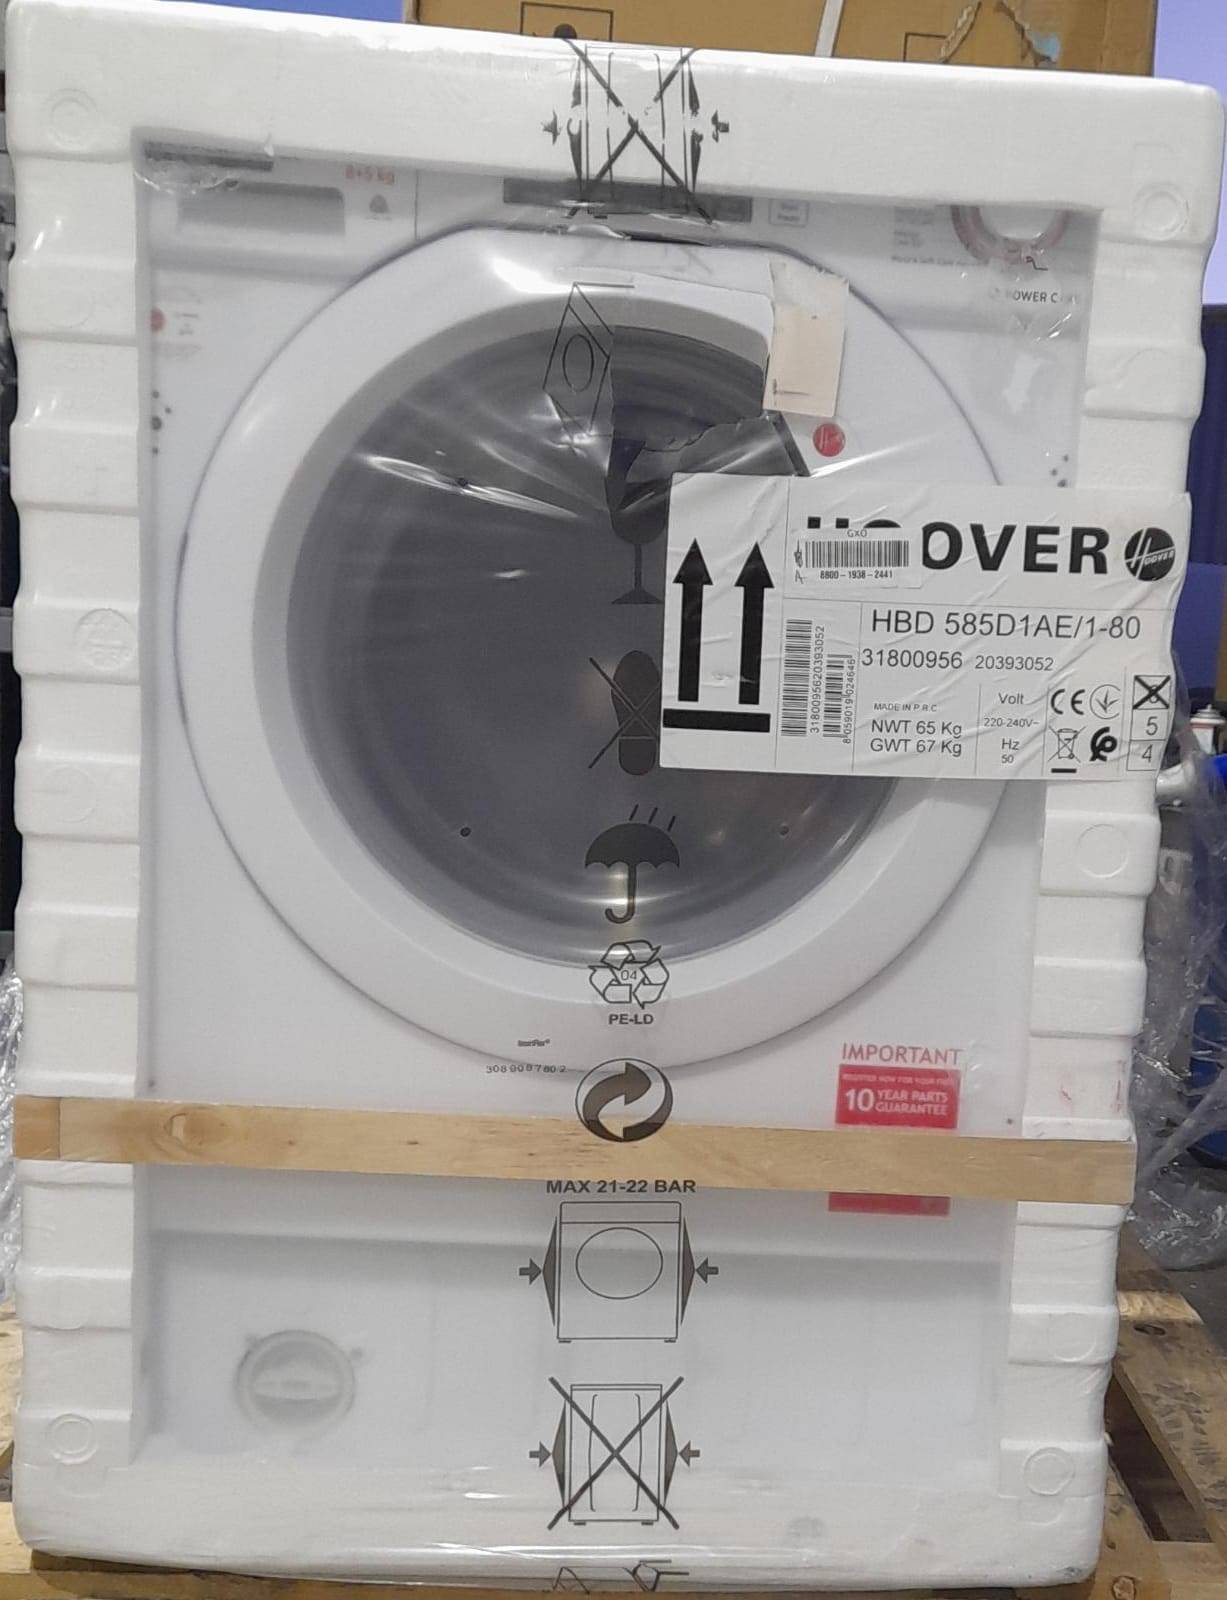 Hoover HBD 585D1AE/1-80 White Built-in Condenser Washer dryer, 8kg/5kg 2441